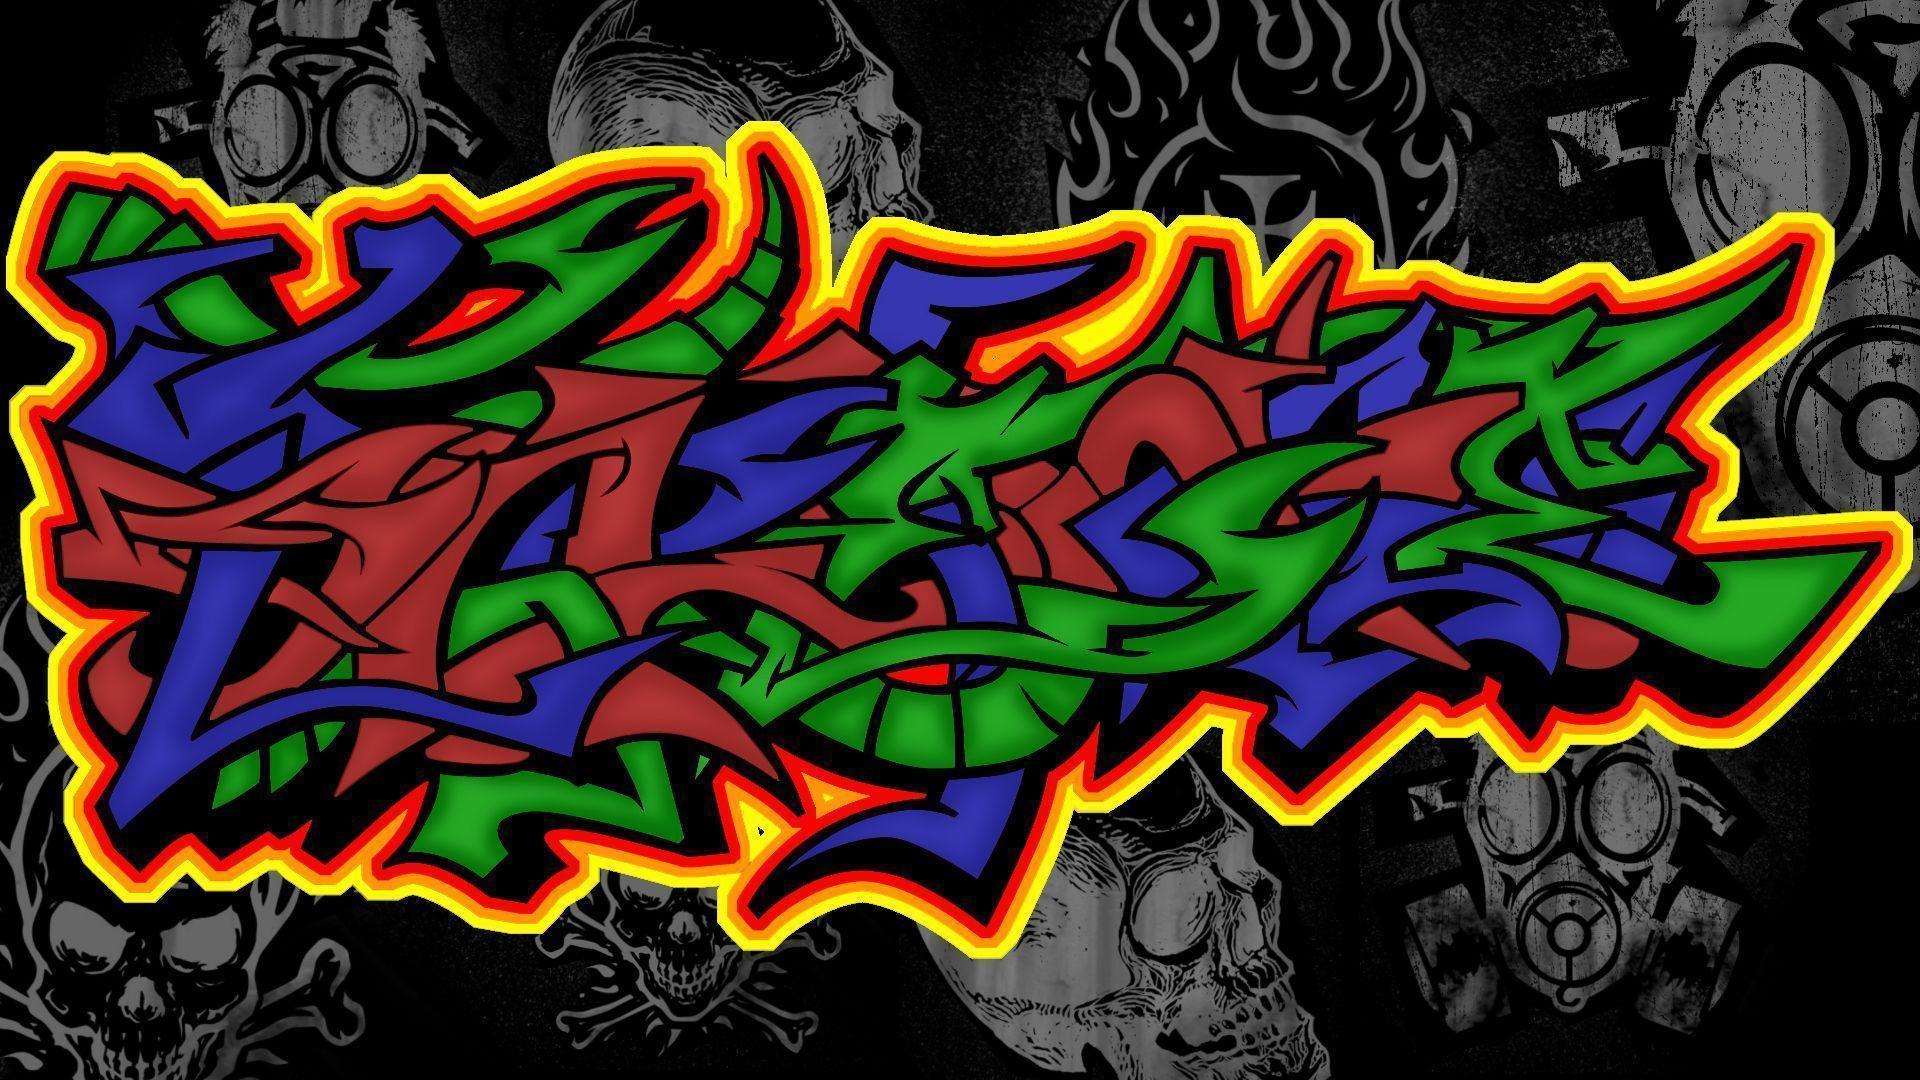 Graffiti 3D wallpaper Awesome Street Art Desktop background taken